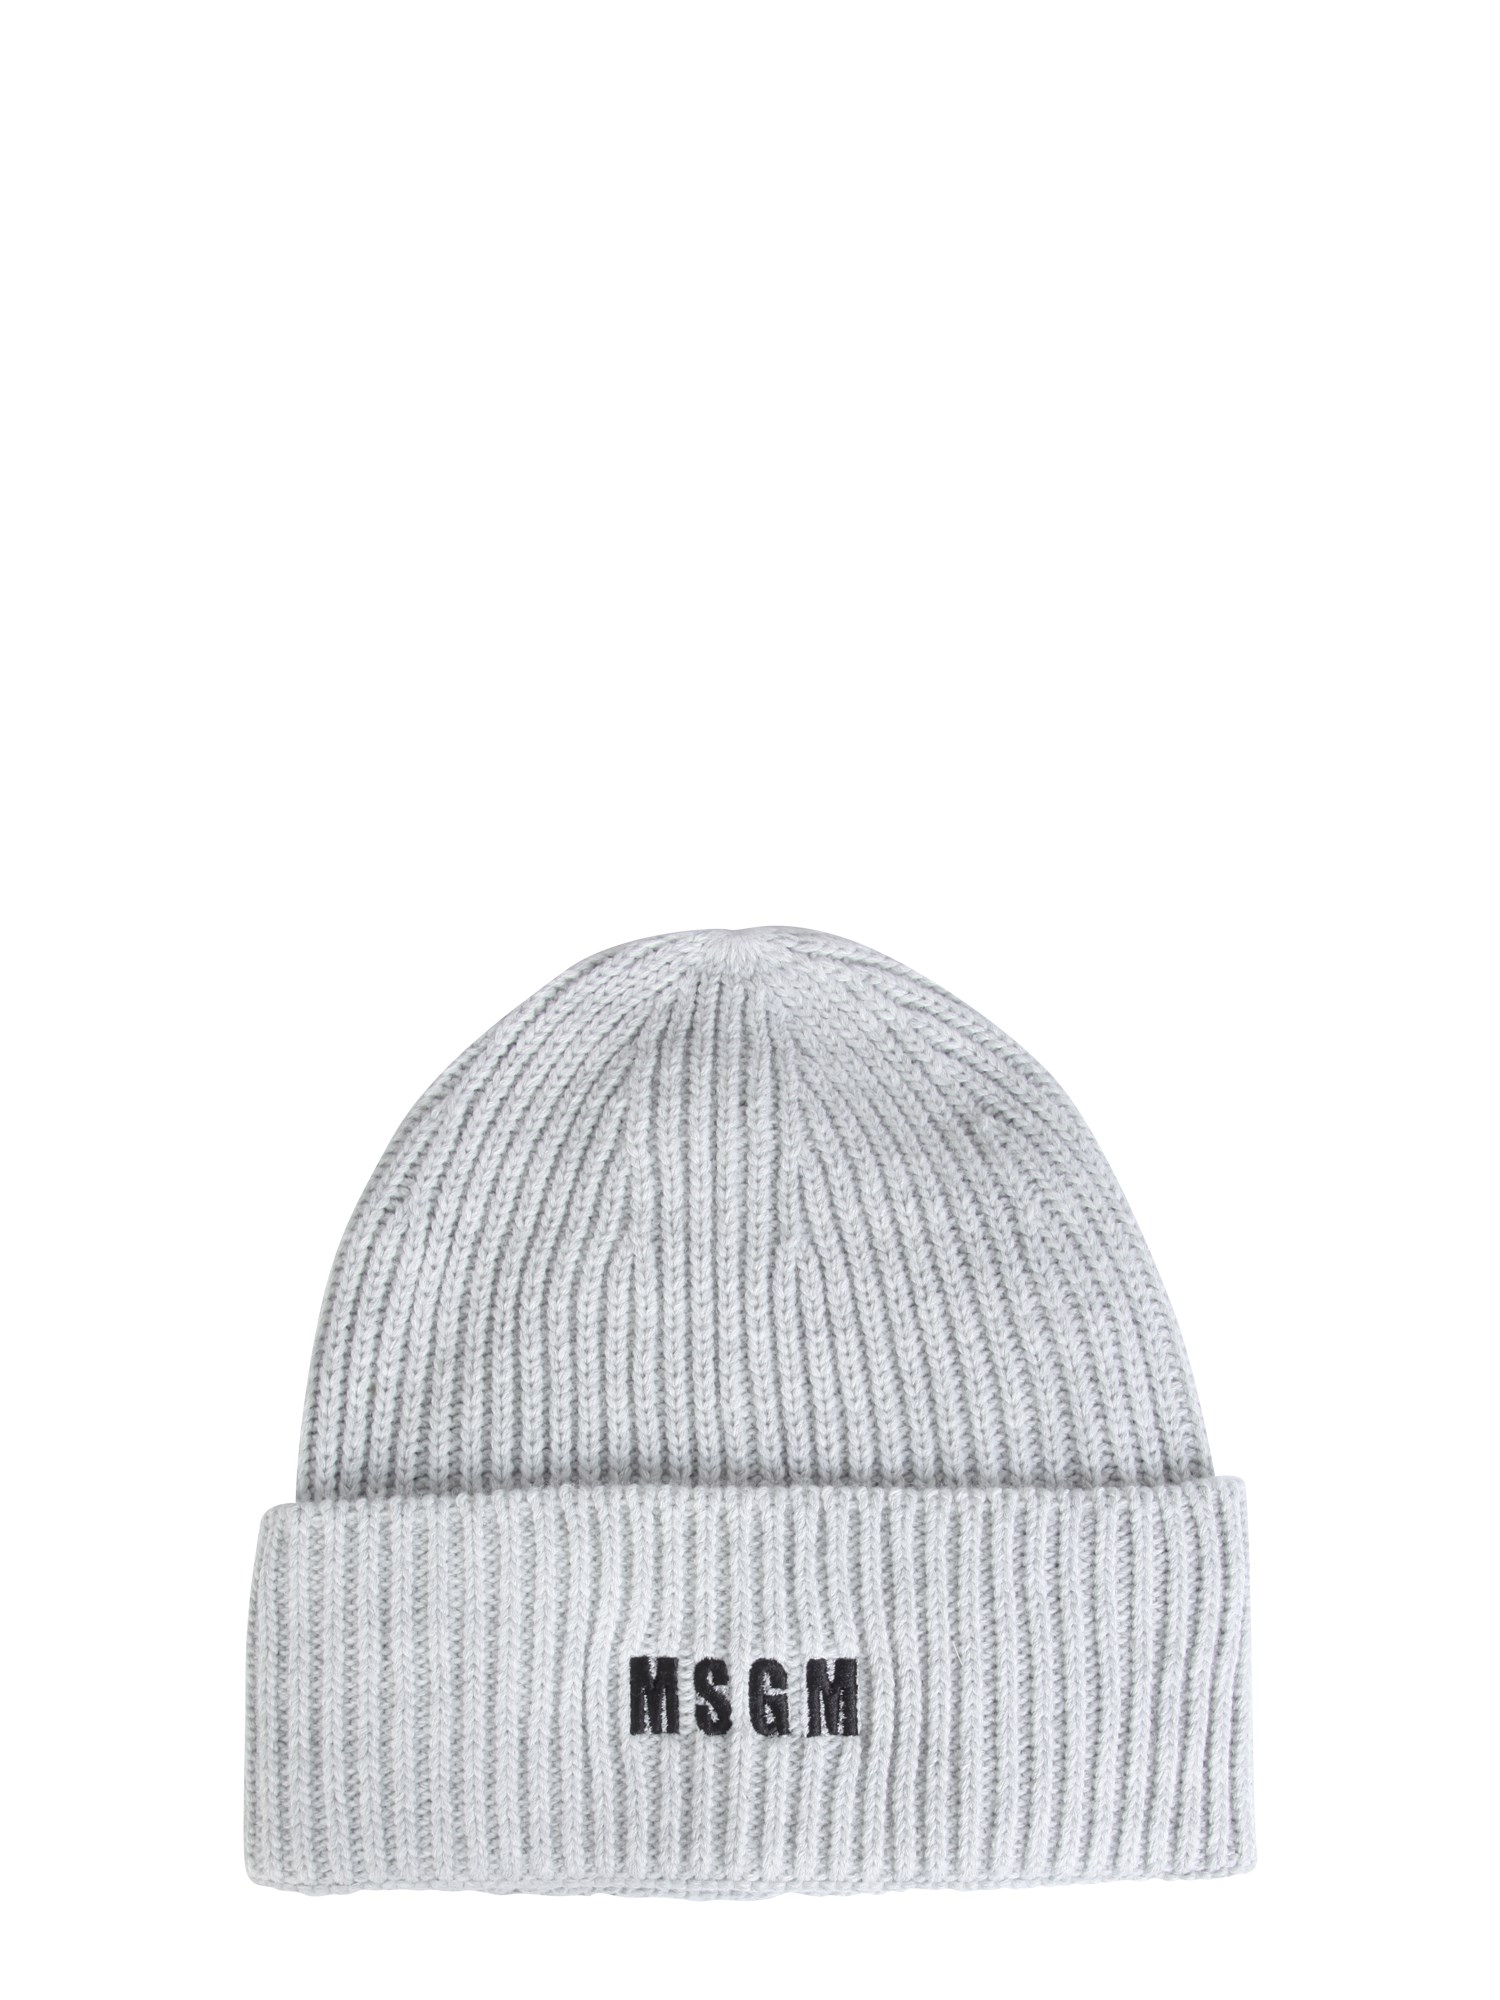 msgm acrylic hat